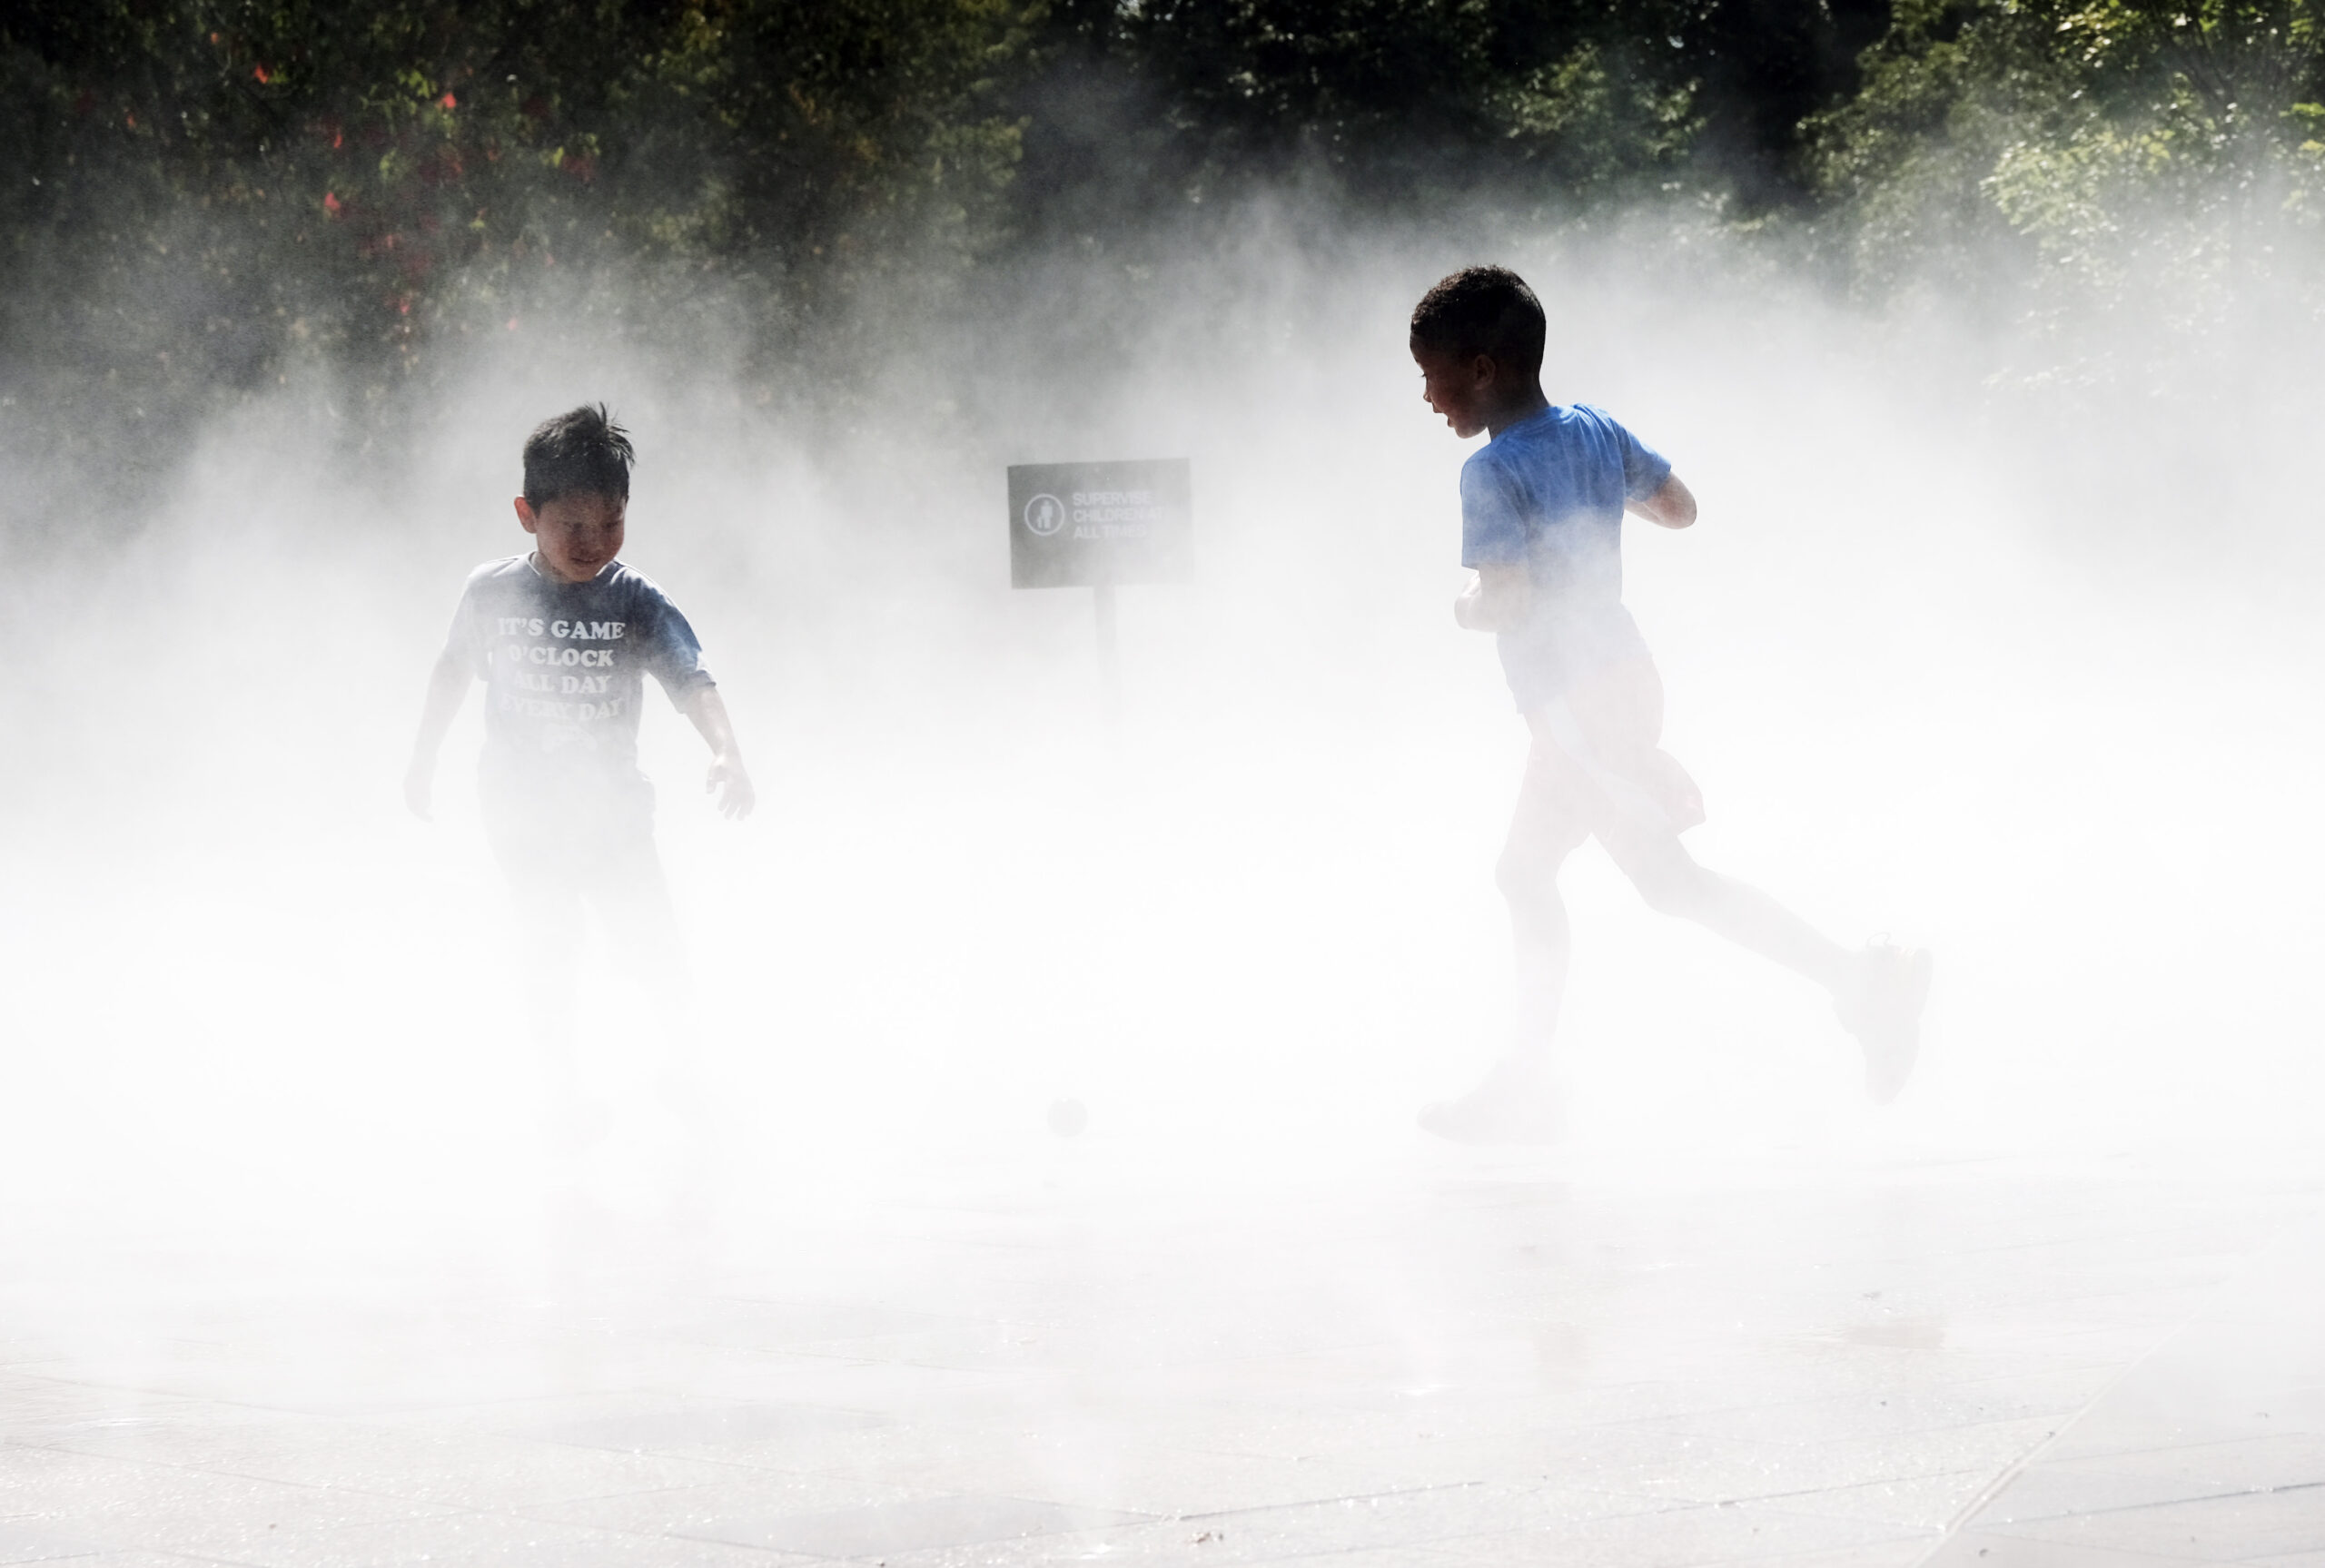 Children play in a misty water.